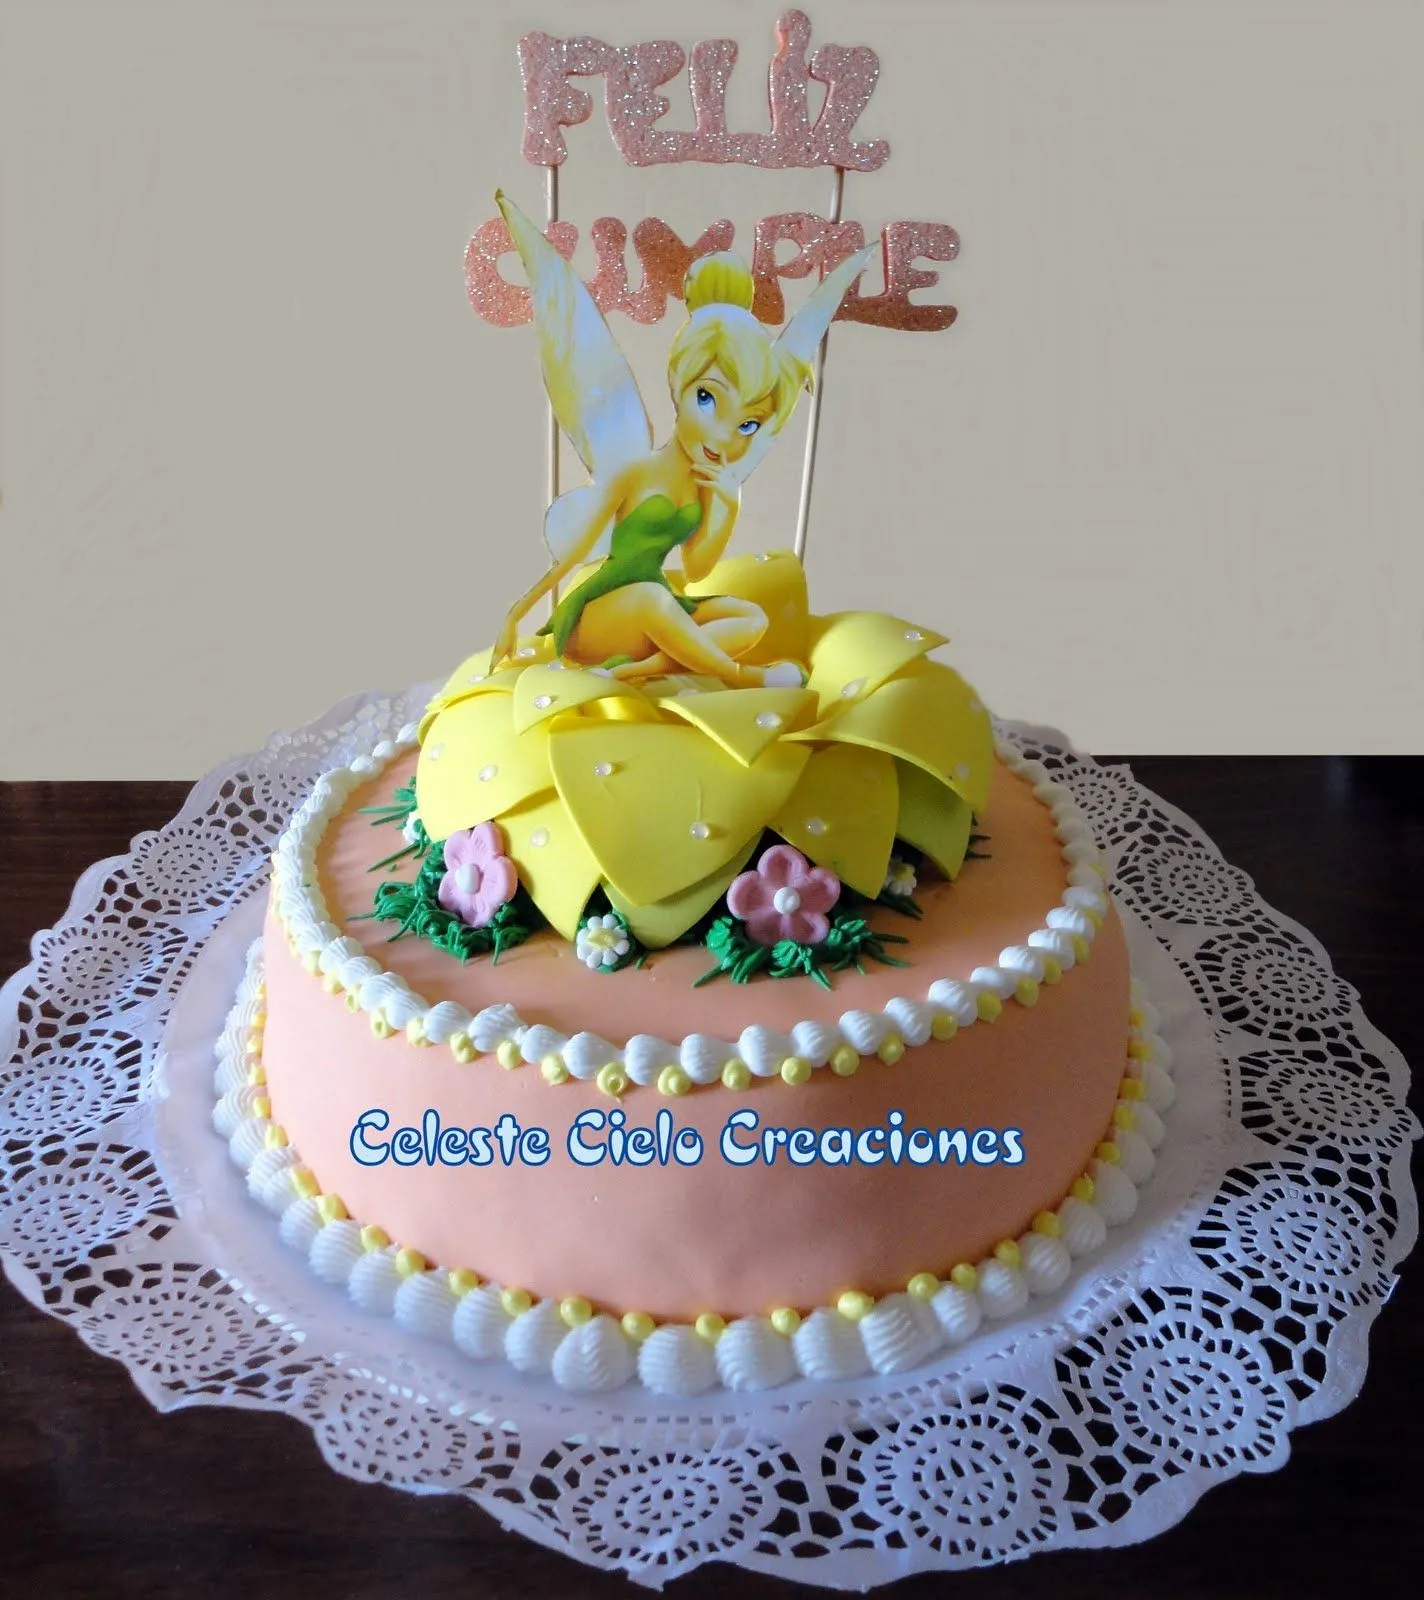 Celeste Cielo Creaciones: Tortas decoradas: Campanita / Tinkerbell